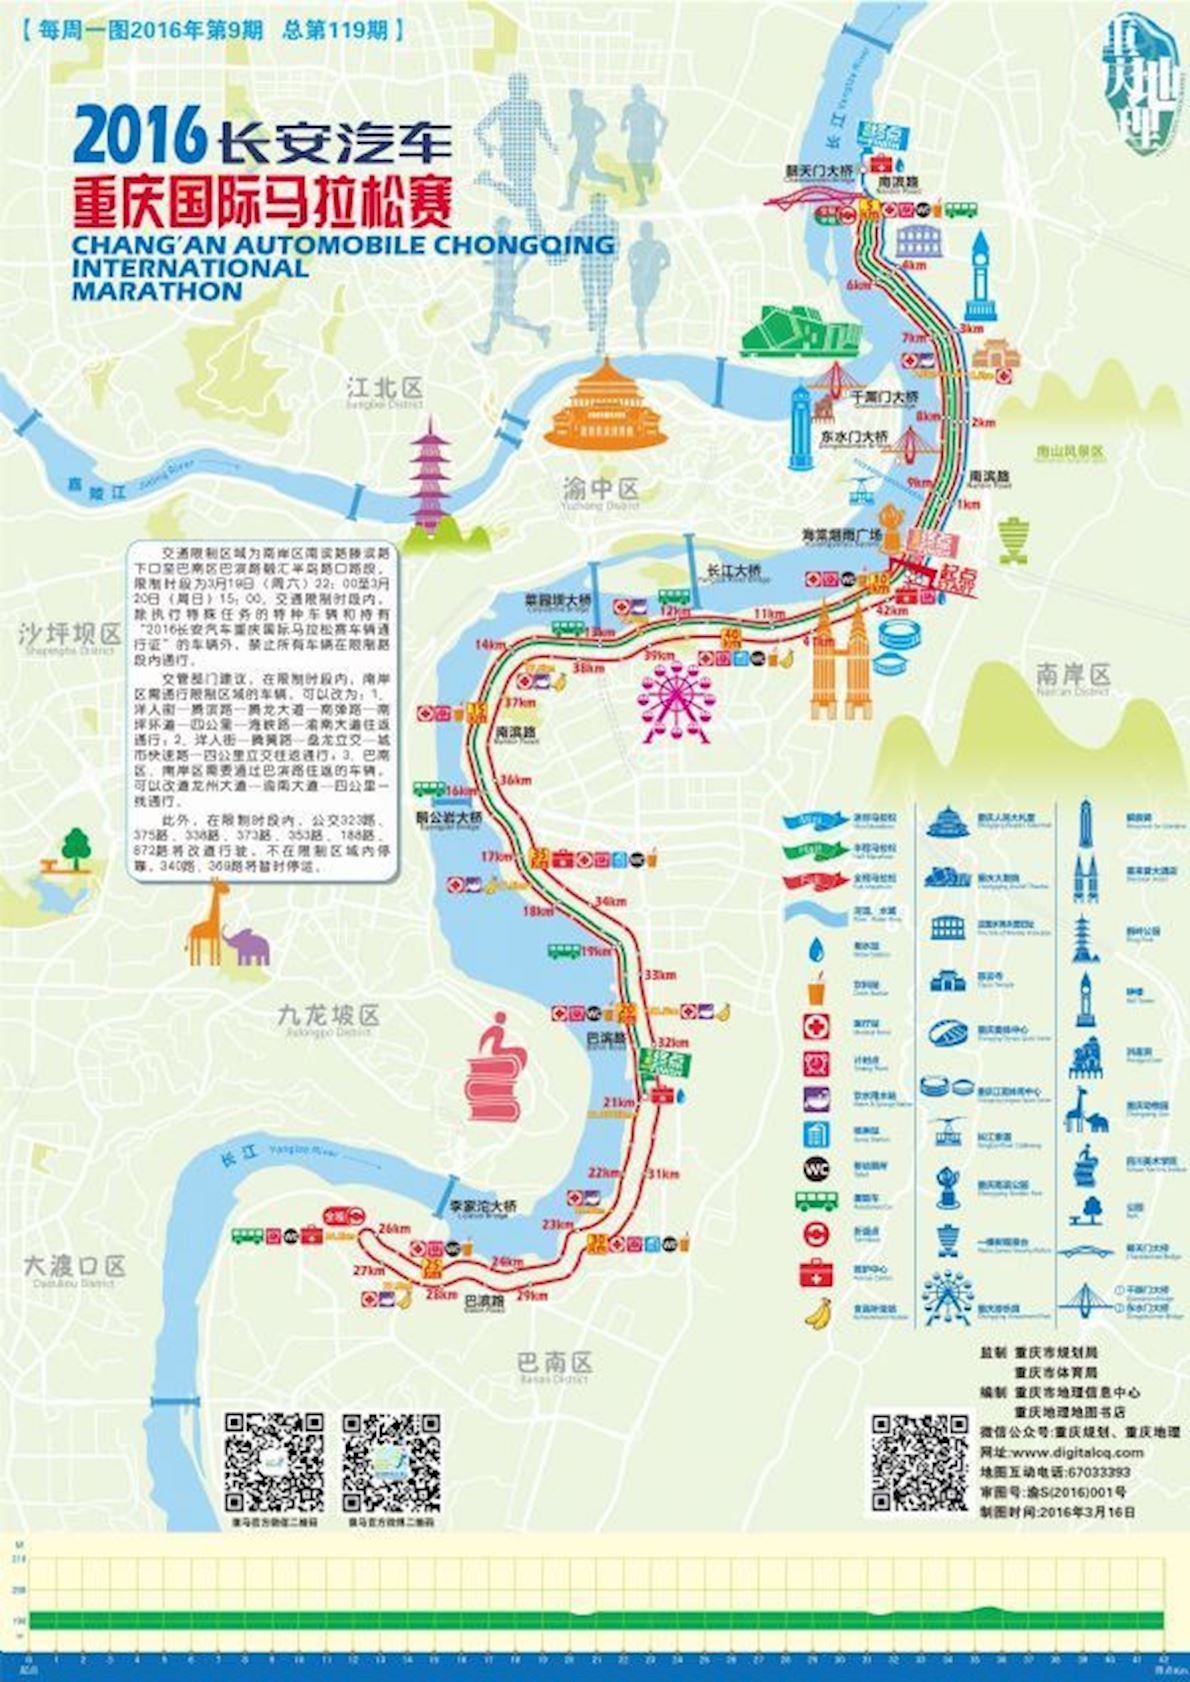 Chongqing International Marathon 路线图